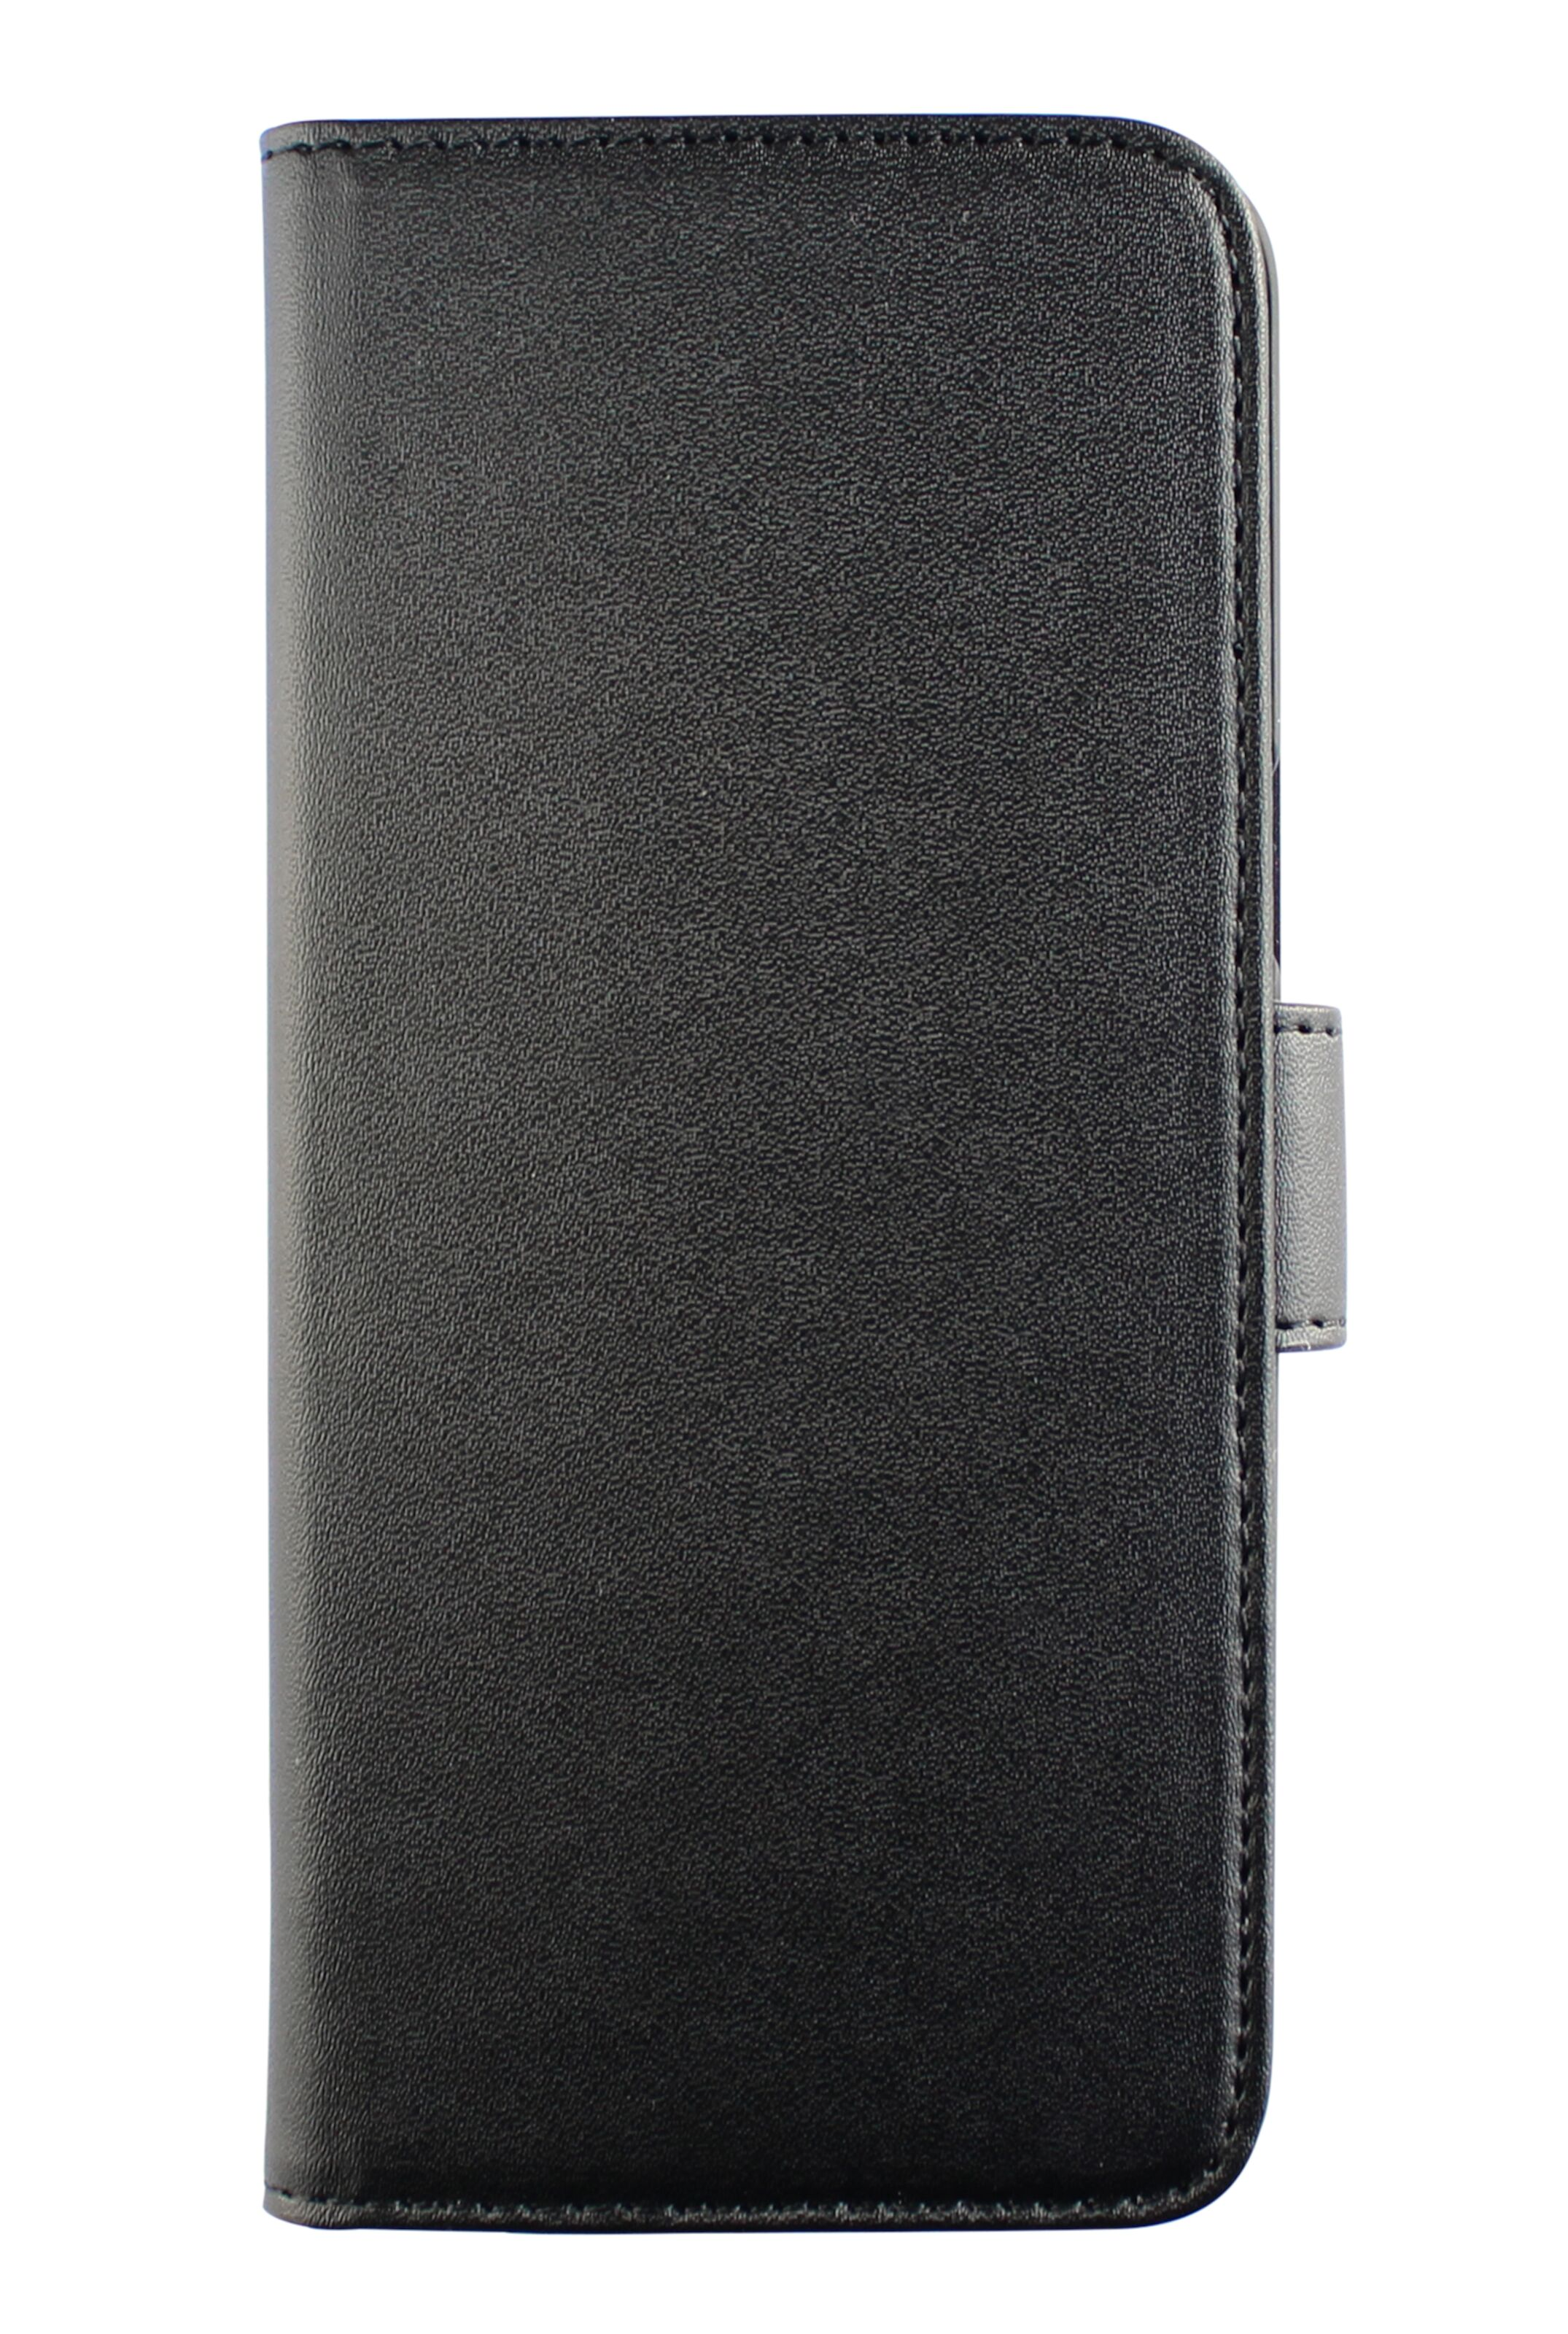 Mobilplånbok för Galaxy S8